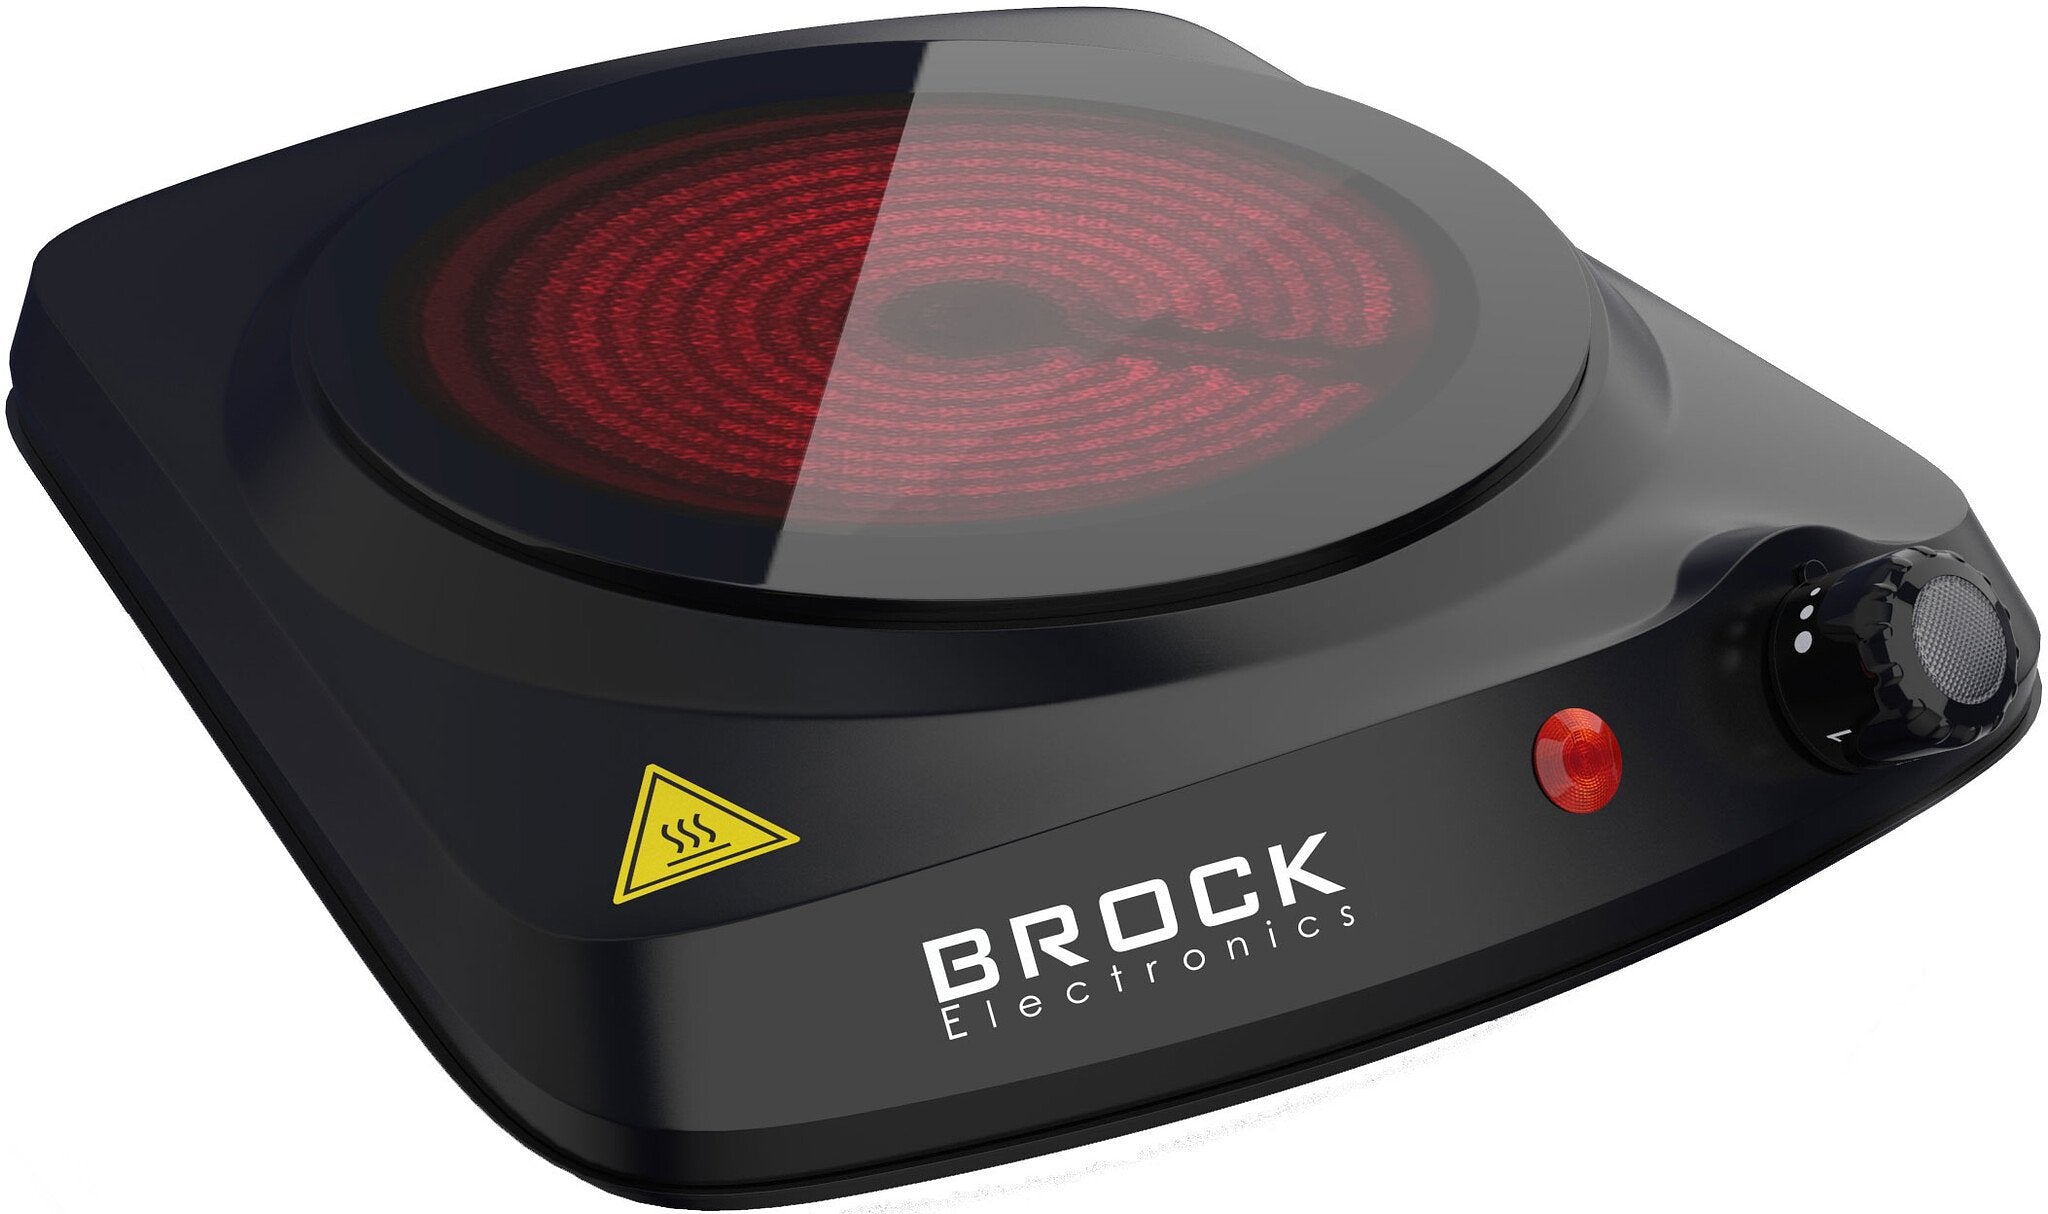 BROCK Electronics Infrarood Kookplaat HPI 3001 BK (1200W, Ø 17,7 cm)